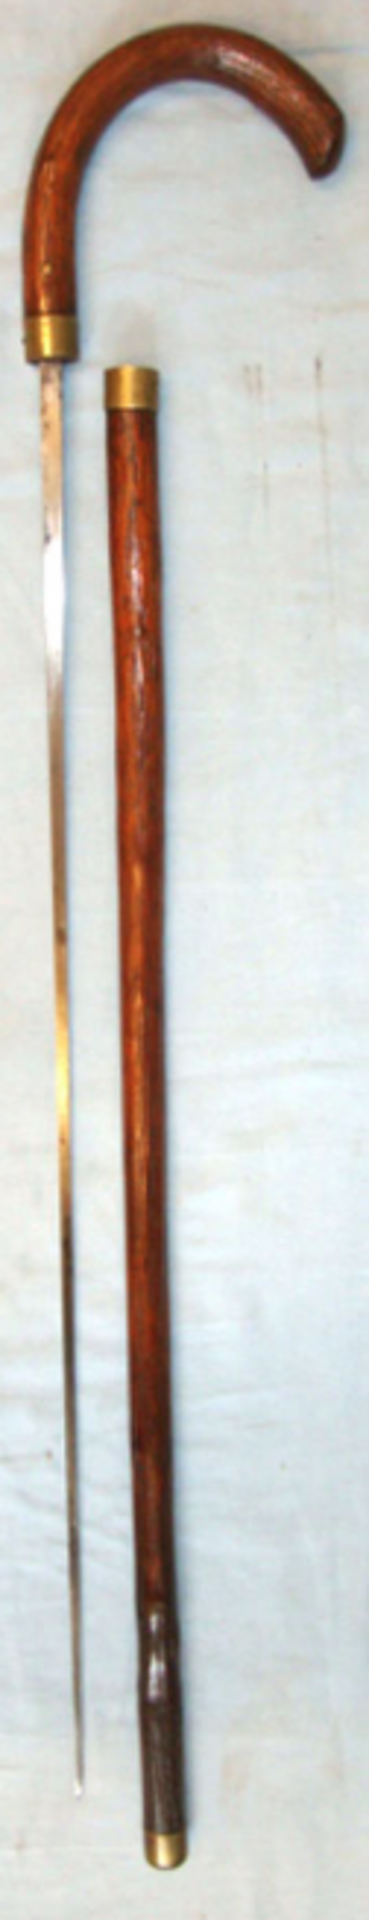 Victorian Customs Officer's Briar Sword Stick By Mole Birmingham